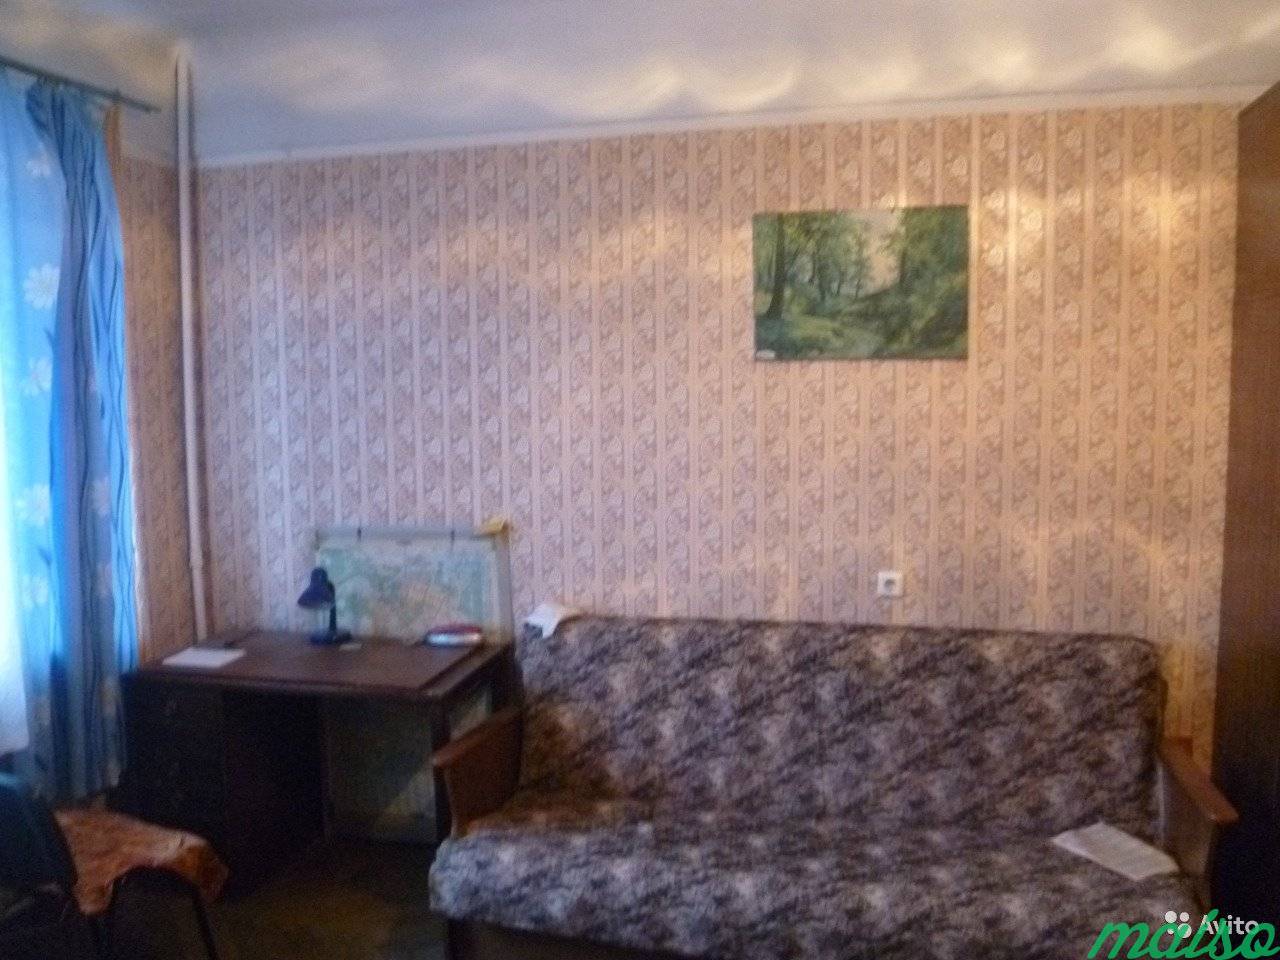 Комната 22 м² в 3-к, 2/6 эт. в Санкт-Петербурге. Фото 3